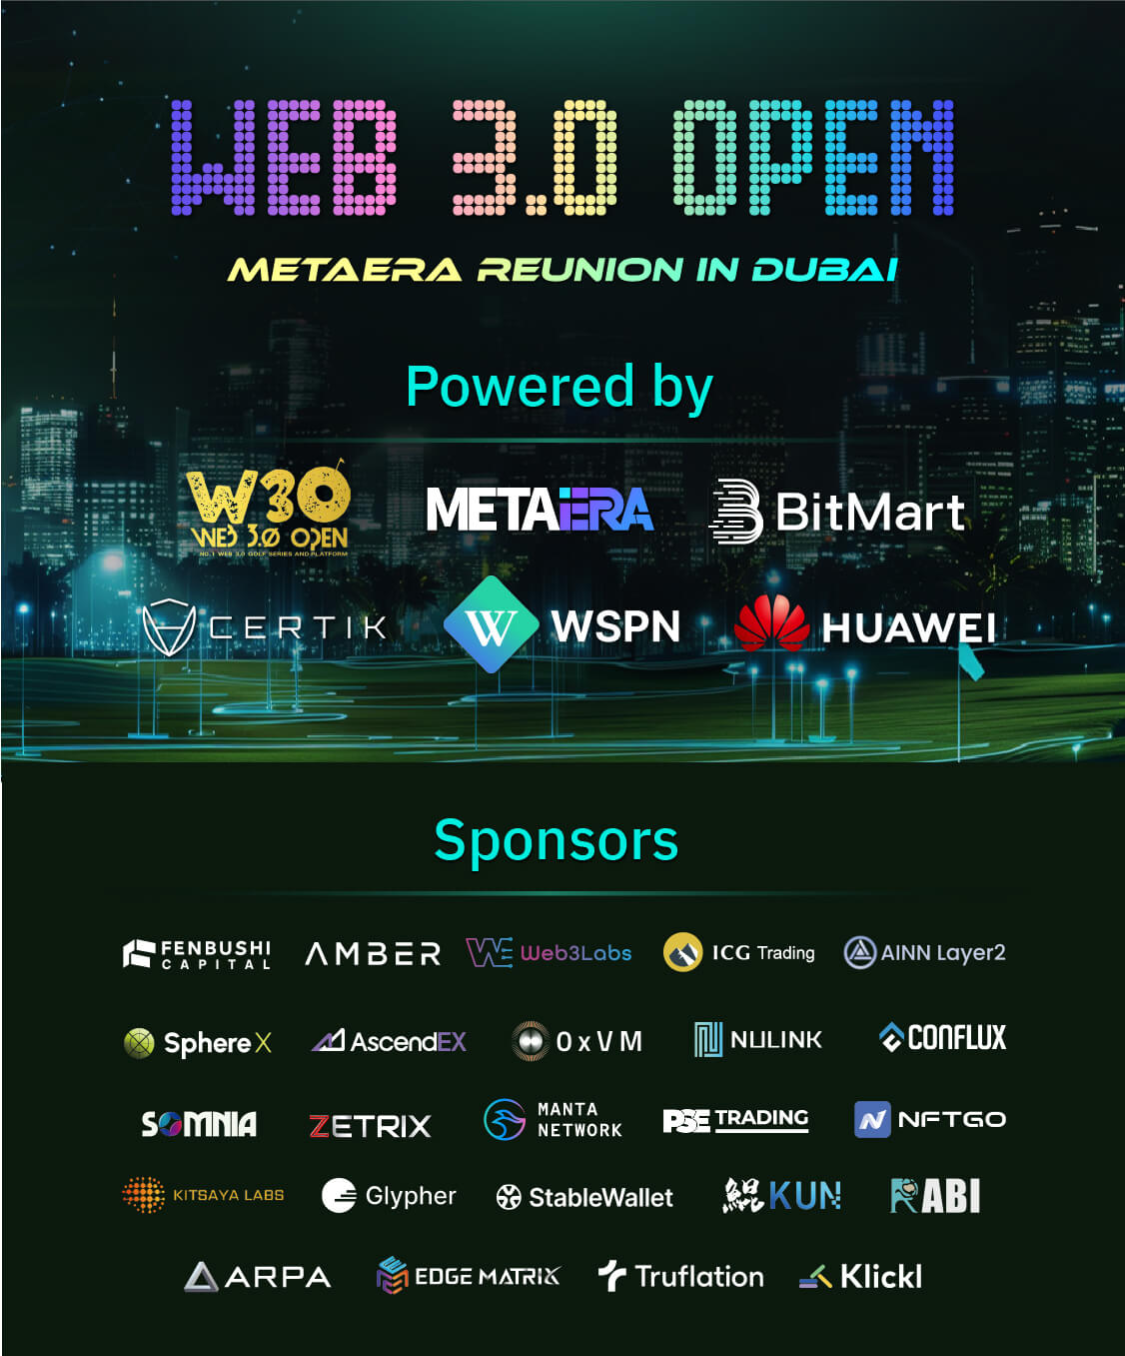 Meta Era 成功籌辦 Web 3.0 Open - Meta Era Reunion in Dubai 高峰會，暢想杜拜數位經濟新可能